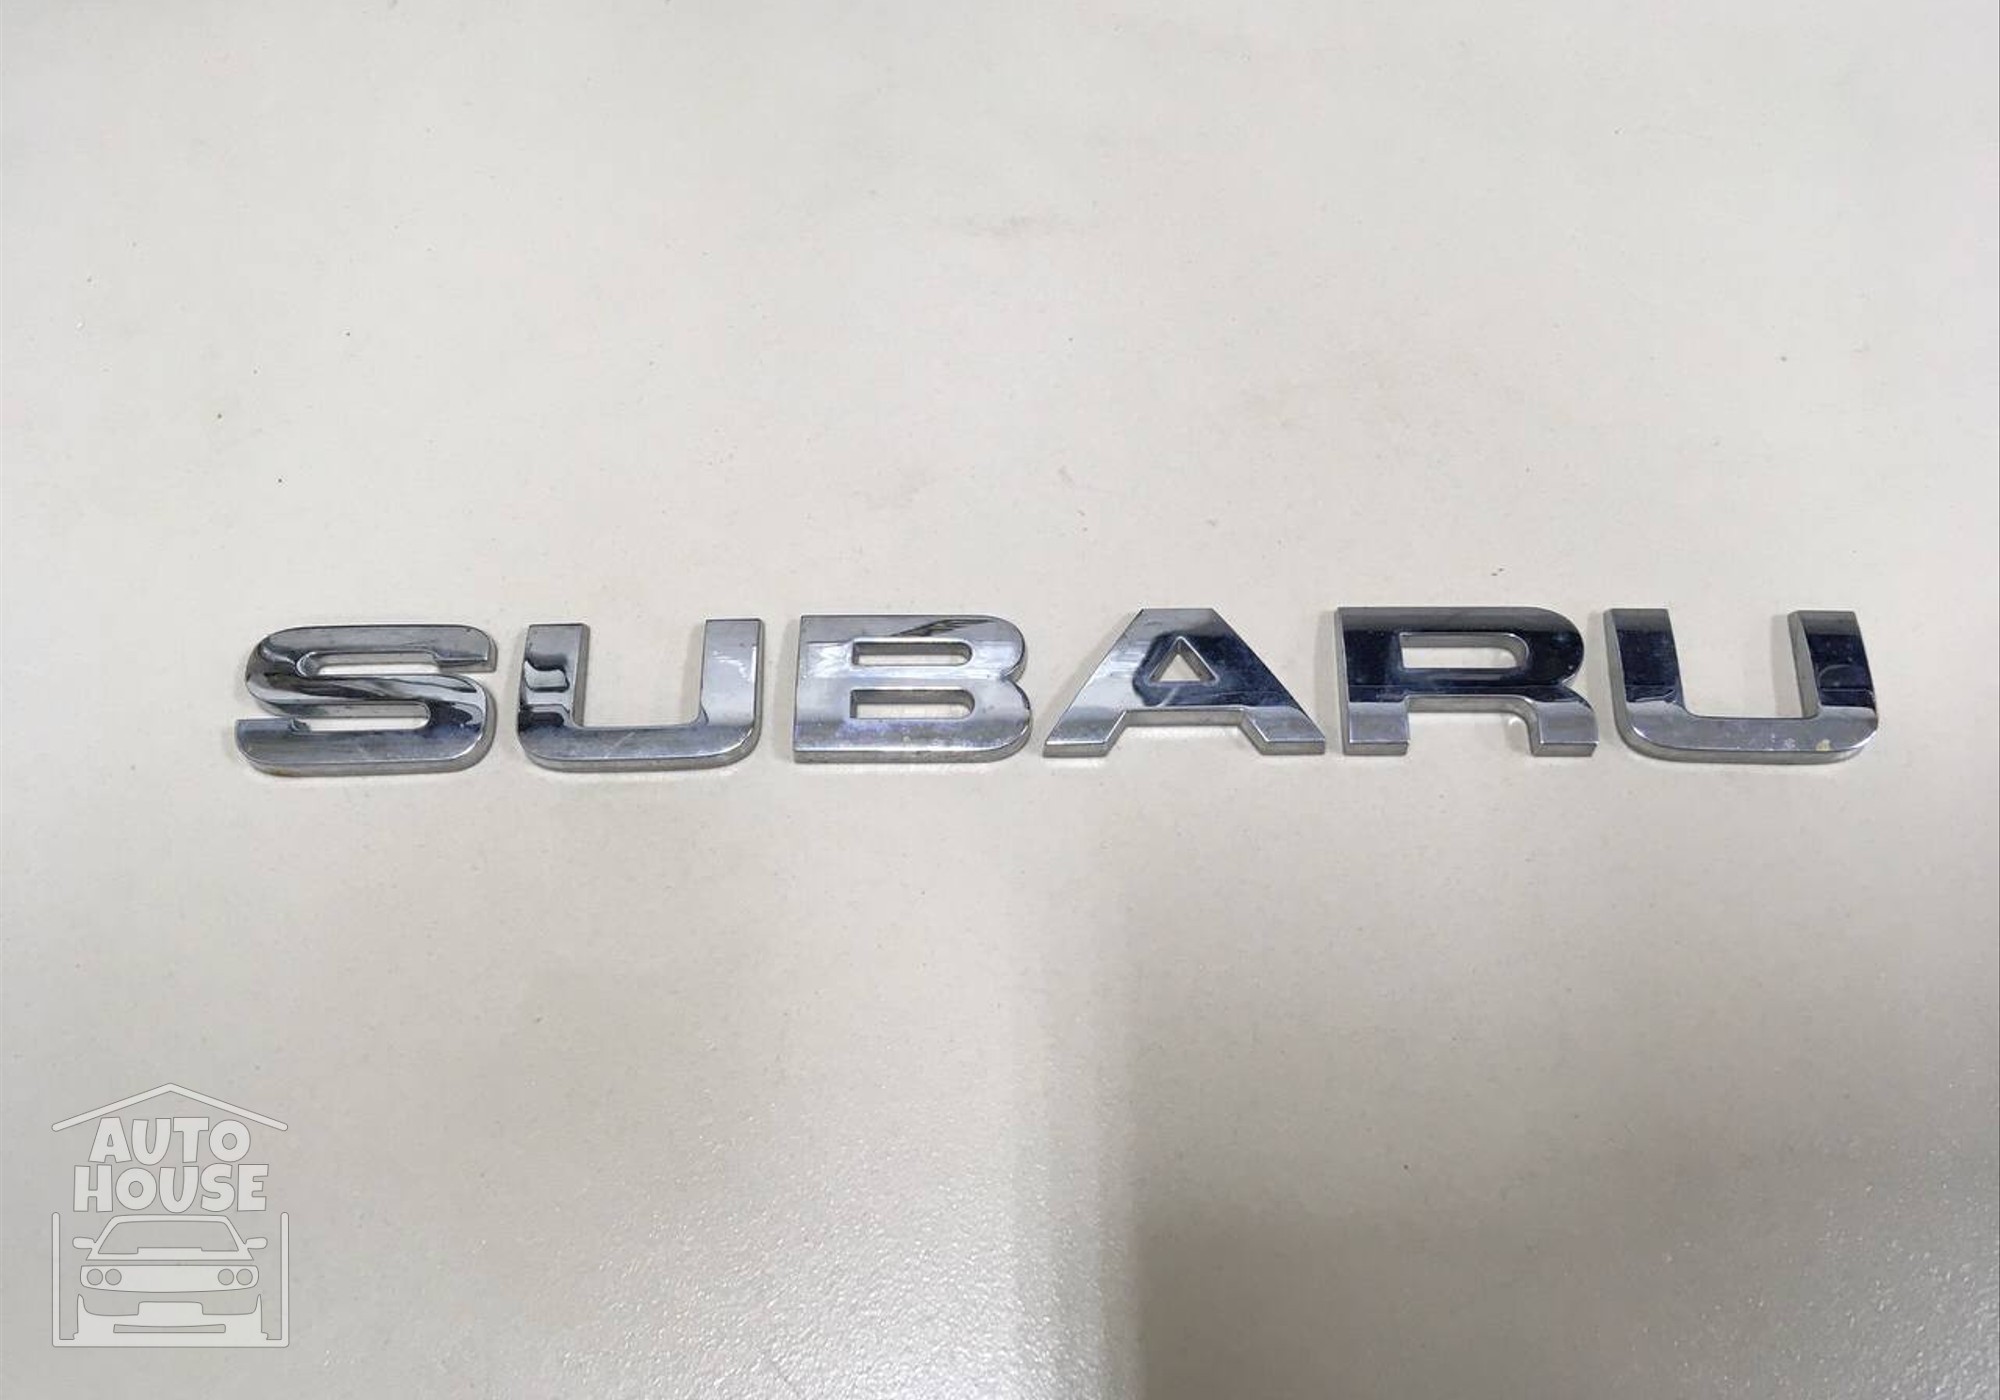 Эмблема на крышку багажника для Subaru Outback V (с 2014 по 2019)